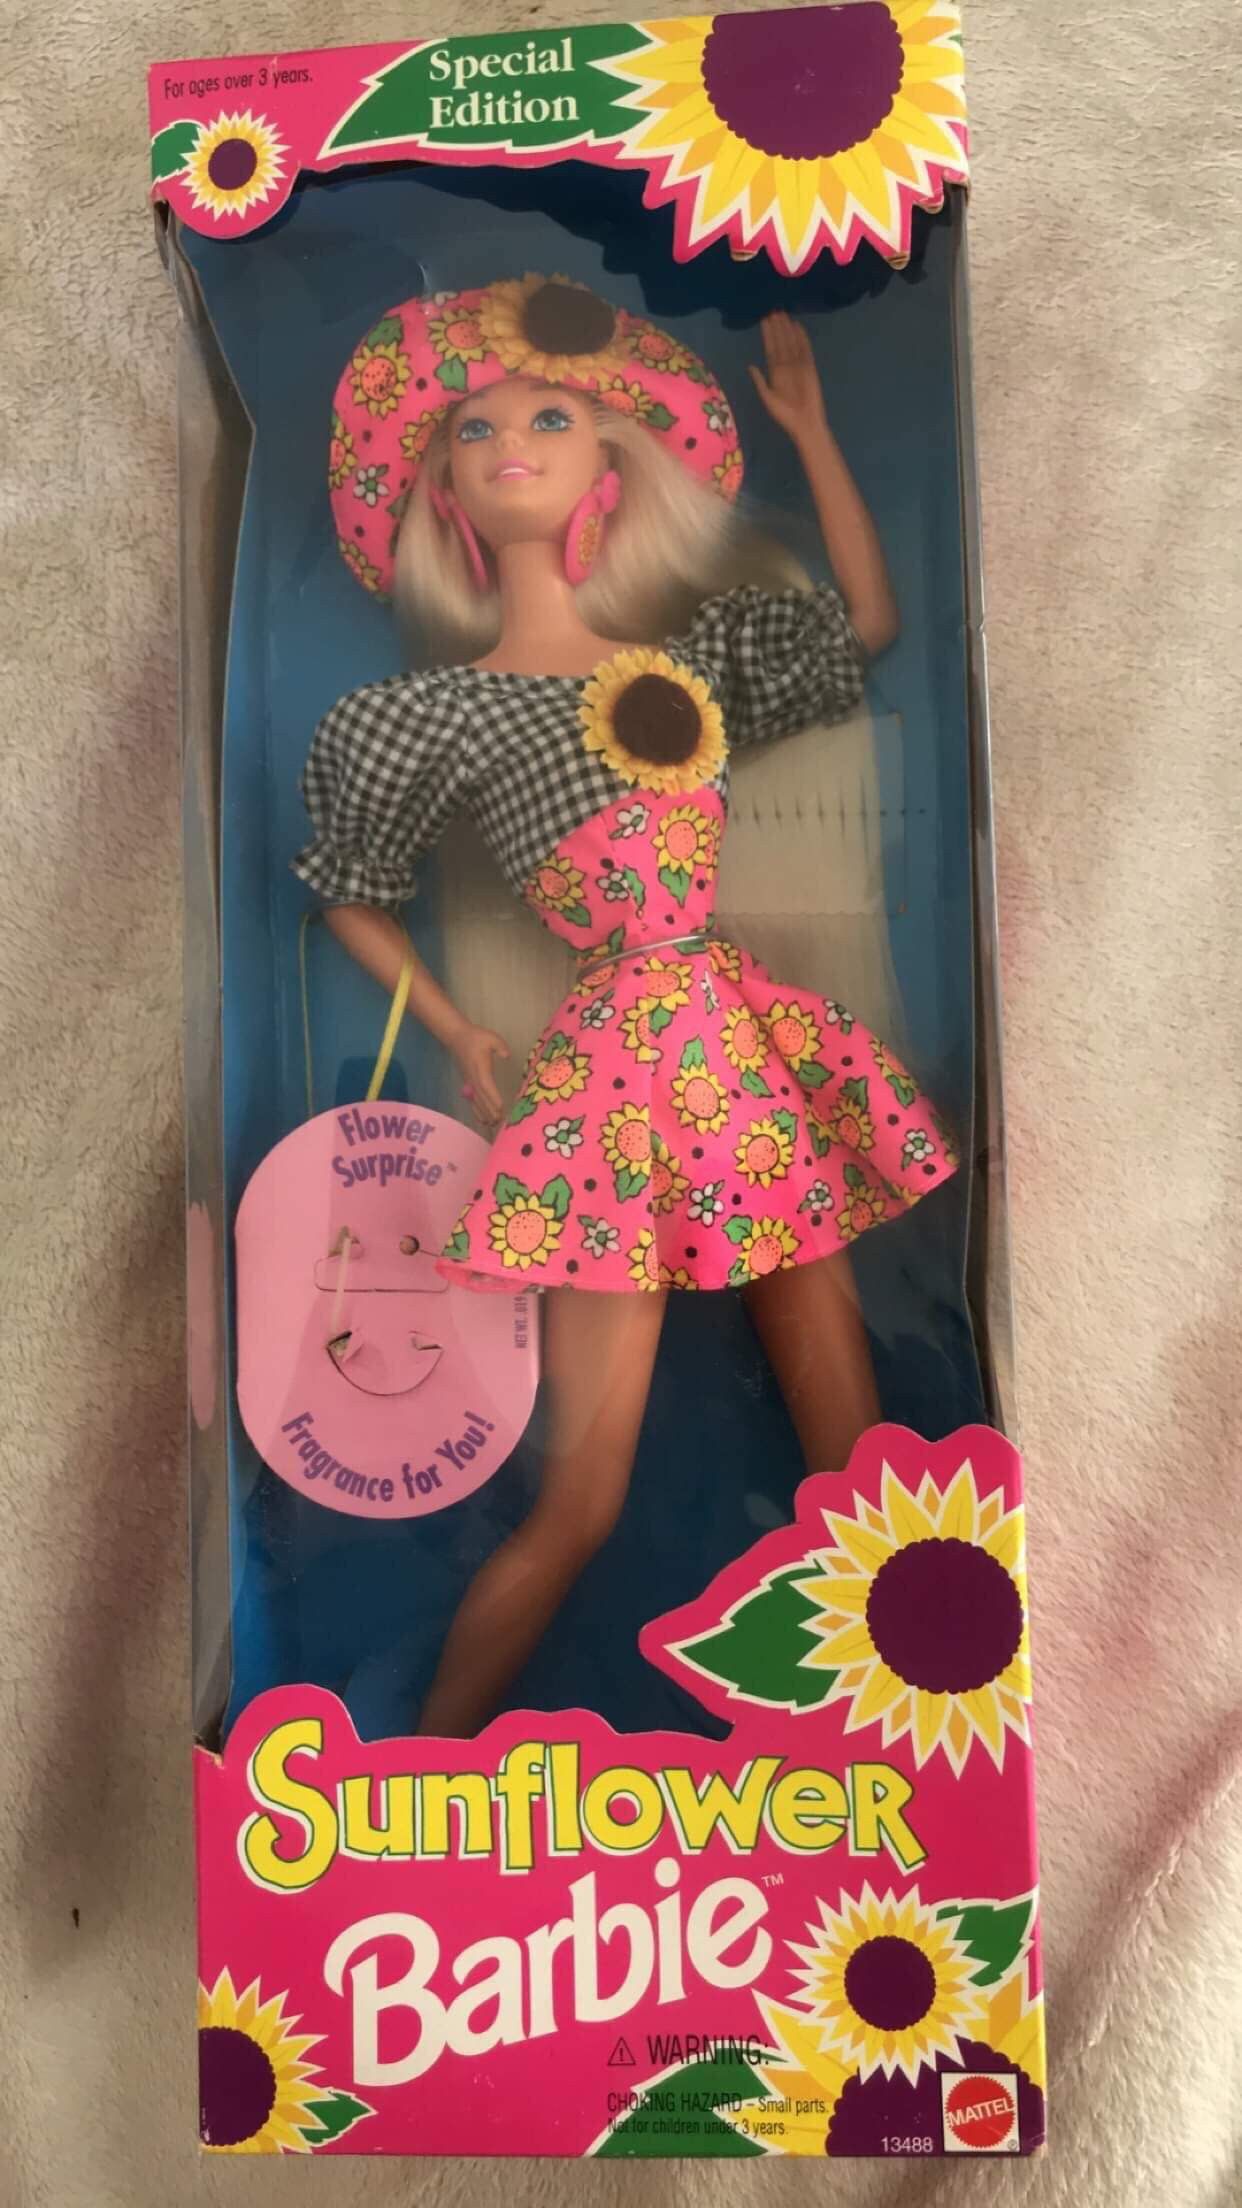 New sunflower barbie